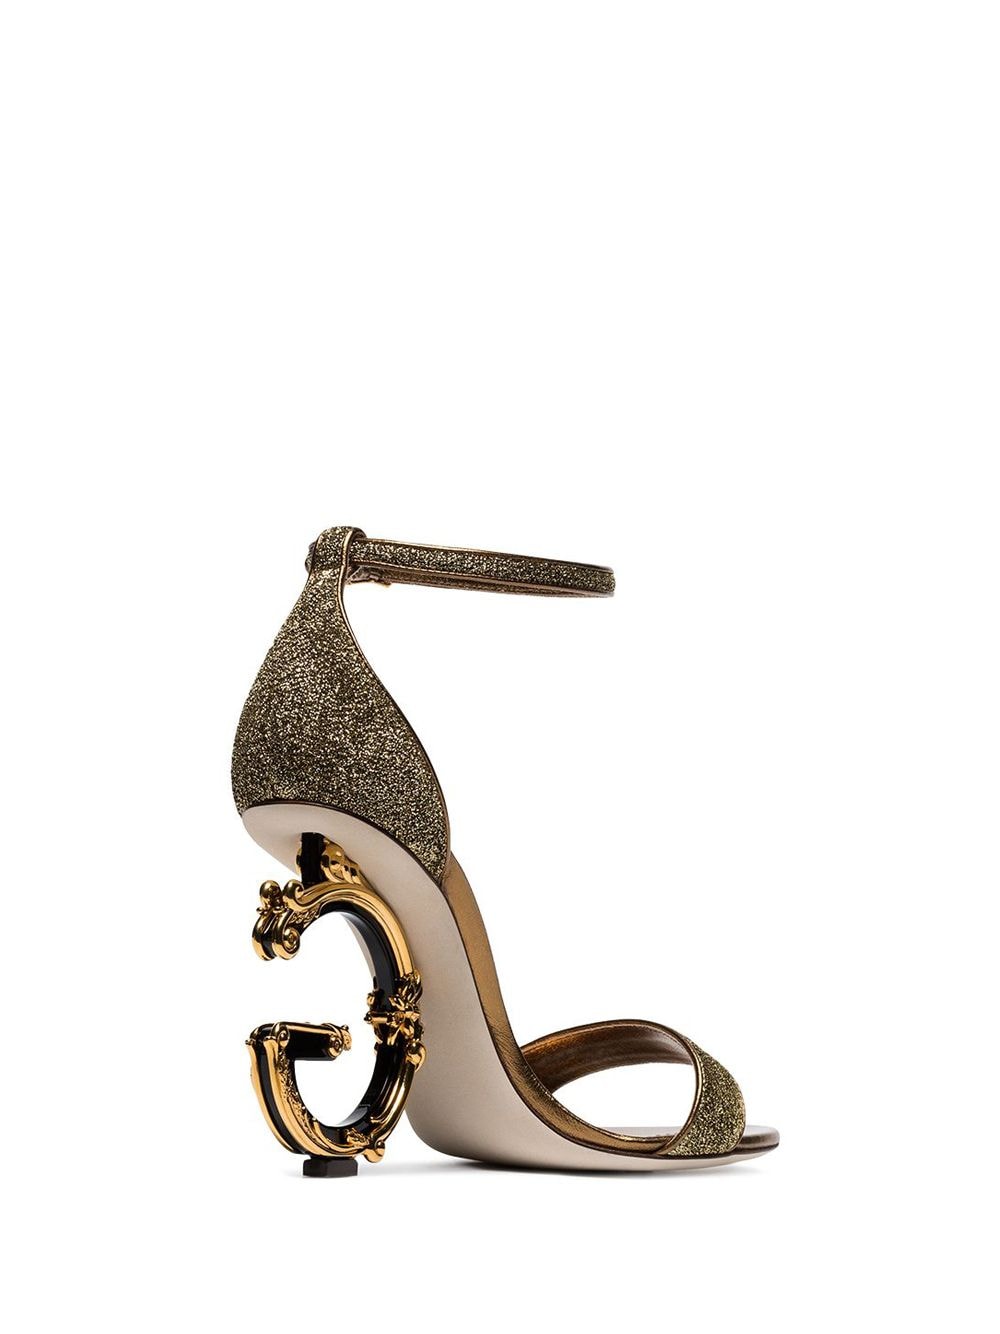 фото Dolce & Gabbana босоножки с металлическим отблеском на каблуке в форме логотипа